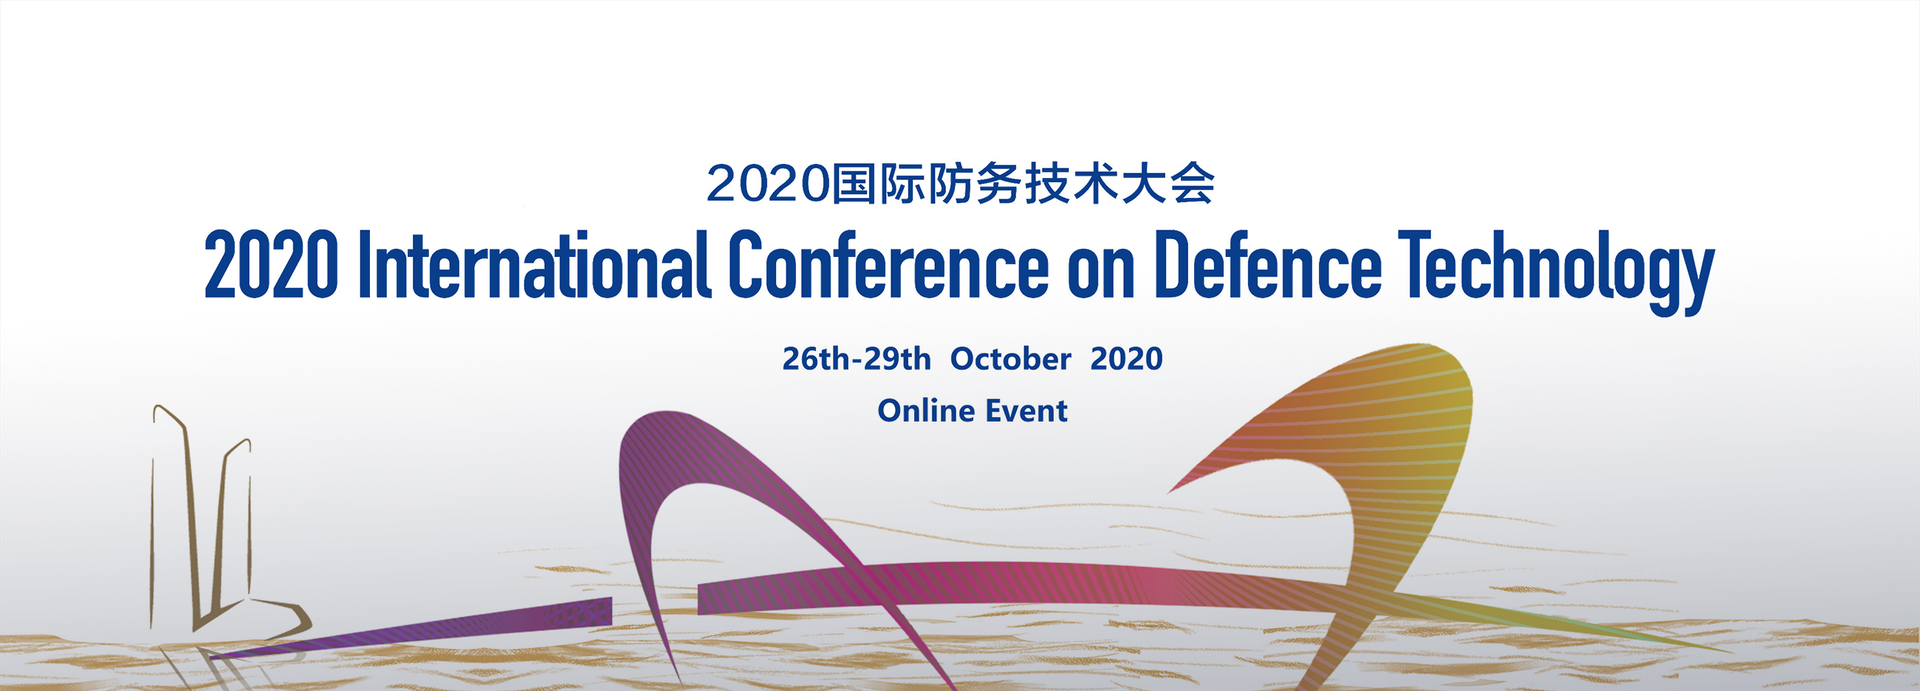 2020 International Conference on Defence Technology